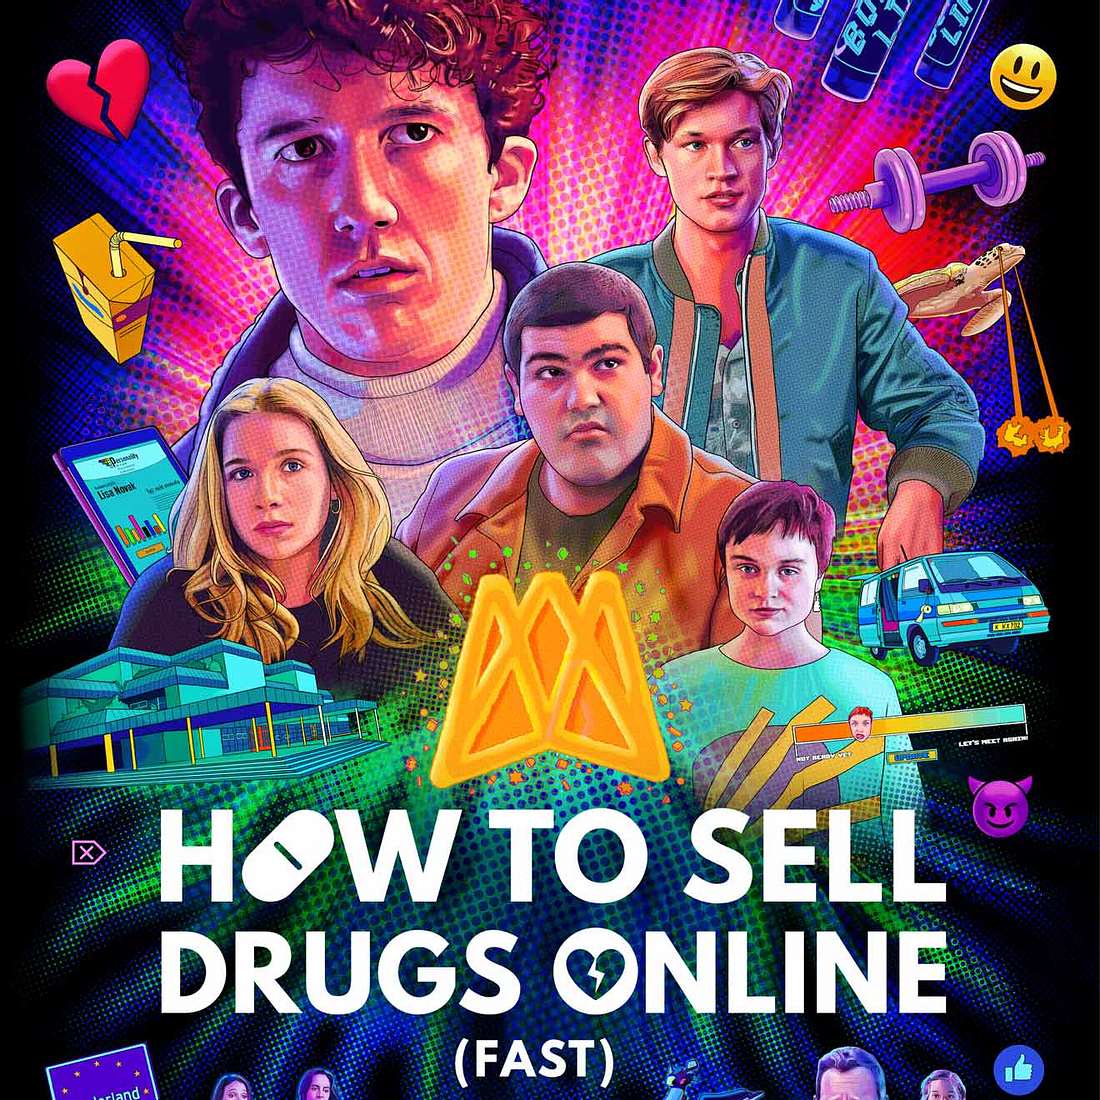 “How To Sell Drugs Online (Fast): Netflix bestätigt Staffel 3